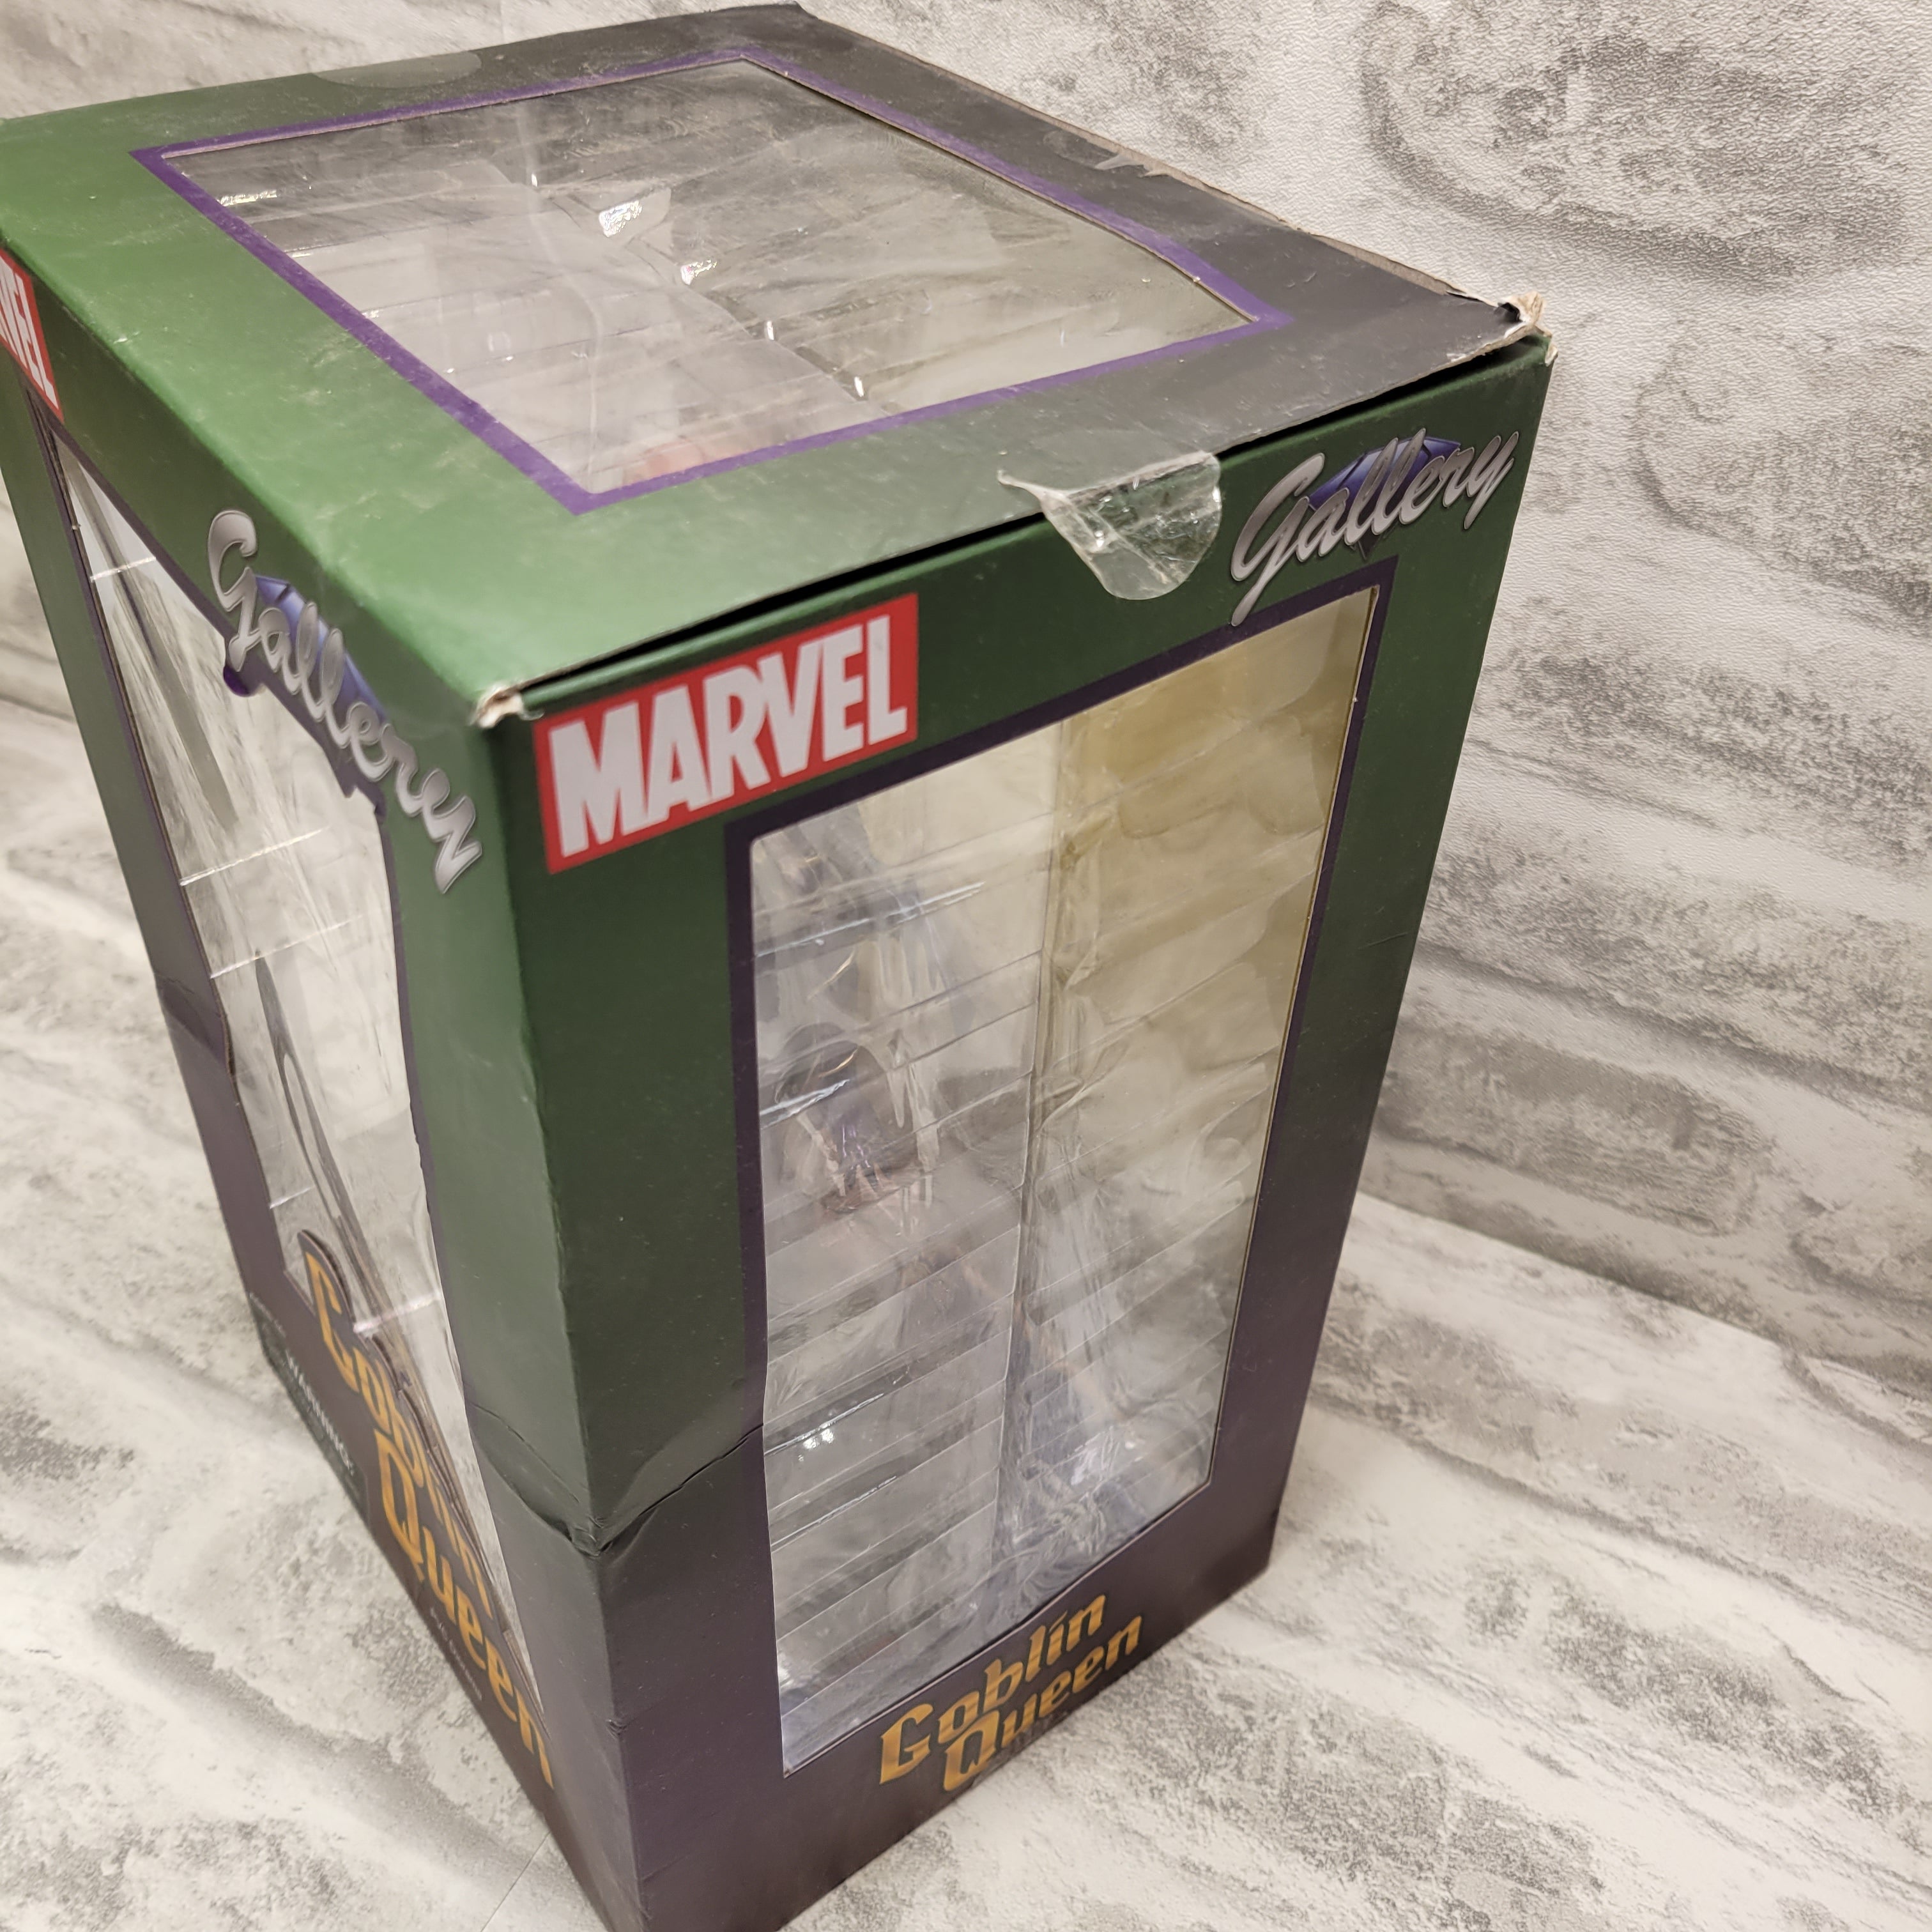 DIAMOND SELECT TOYS Marvel Gallery: Goblin Queen PVC Figure (7603316424942)